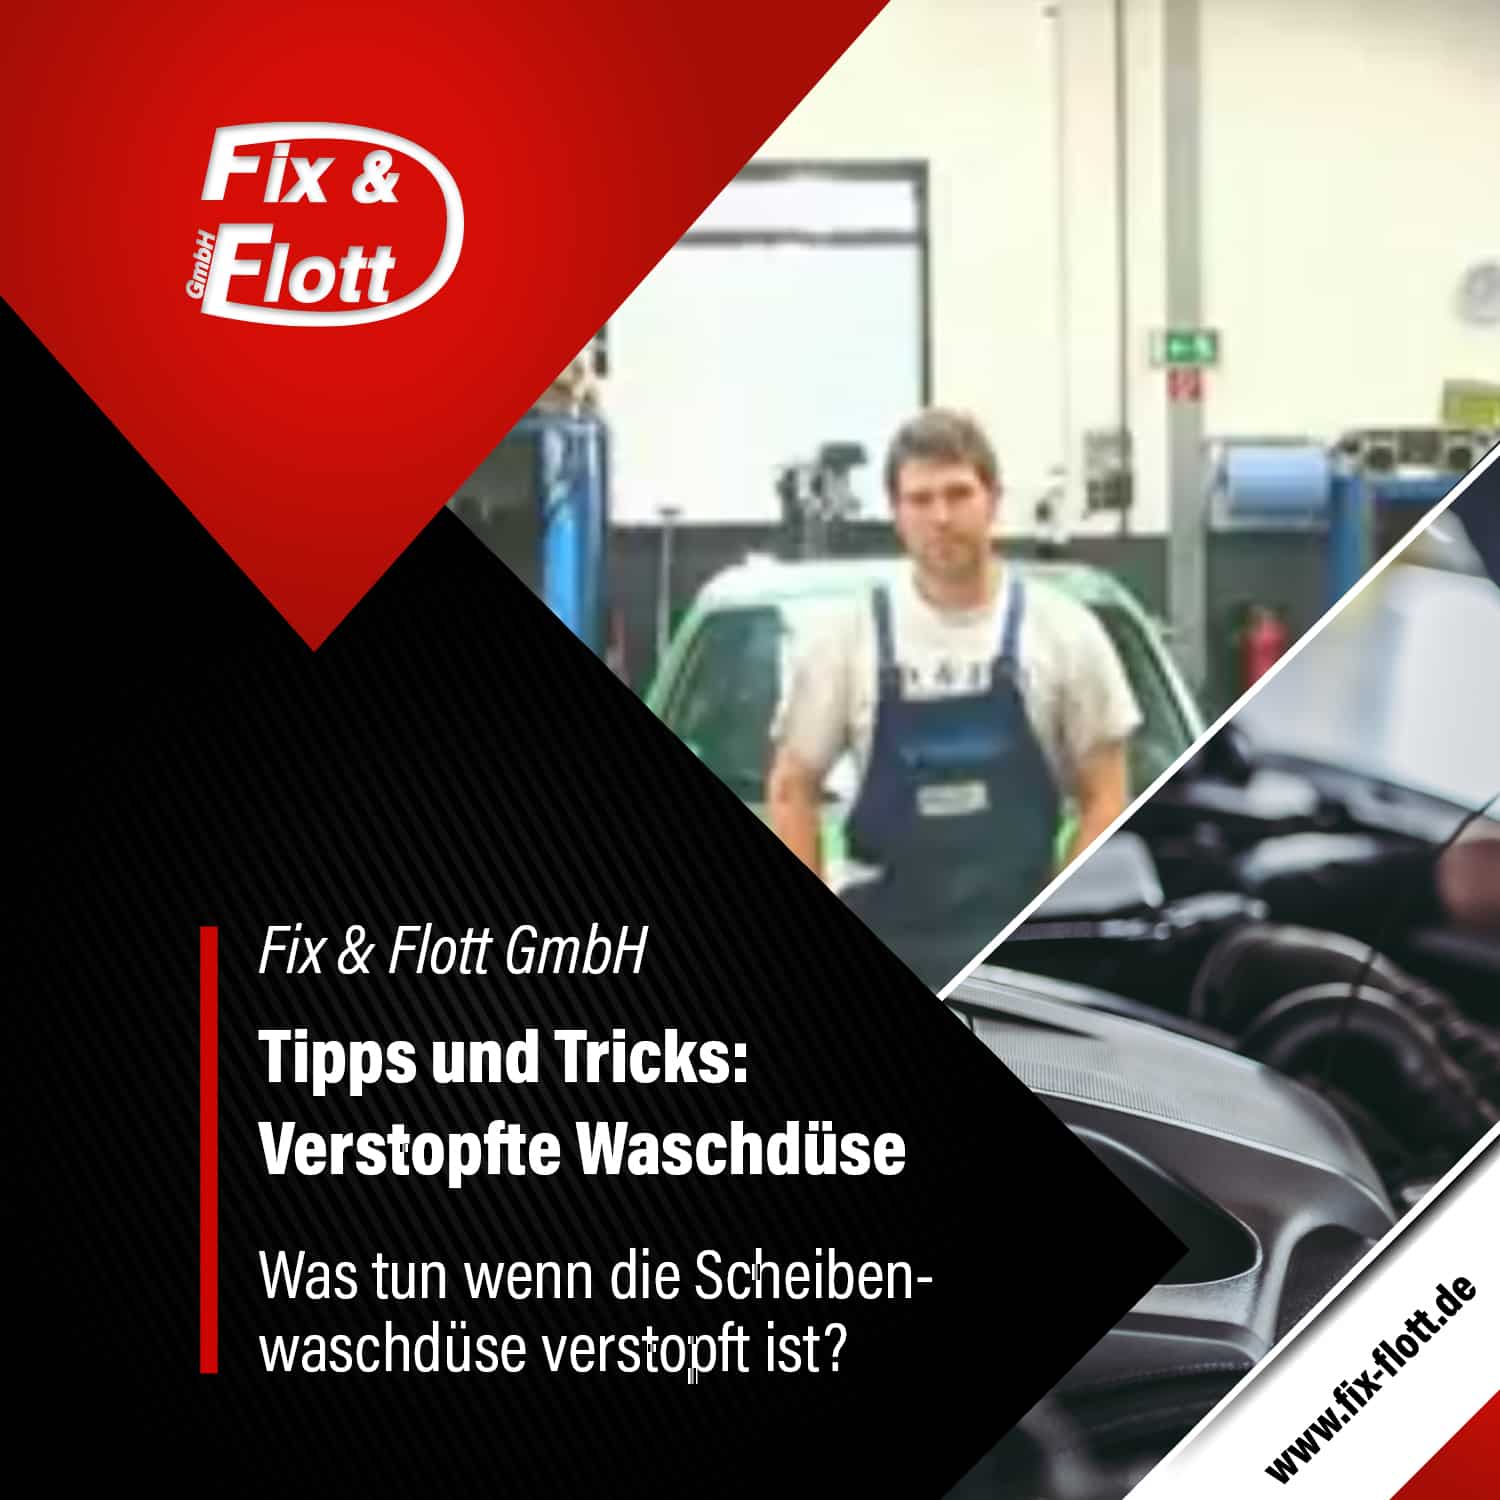 Scheibenwaschduese verstopft - Tipps & Tricks - Kfz-Meister-Werkstatt der Firma Fix & Flott GmbH